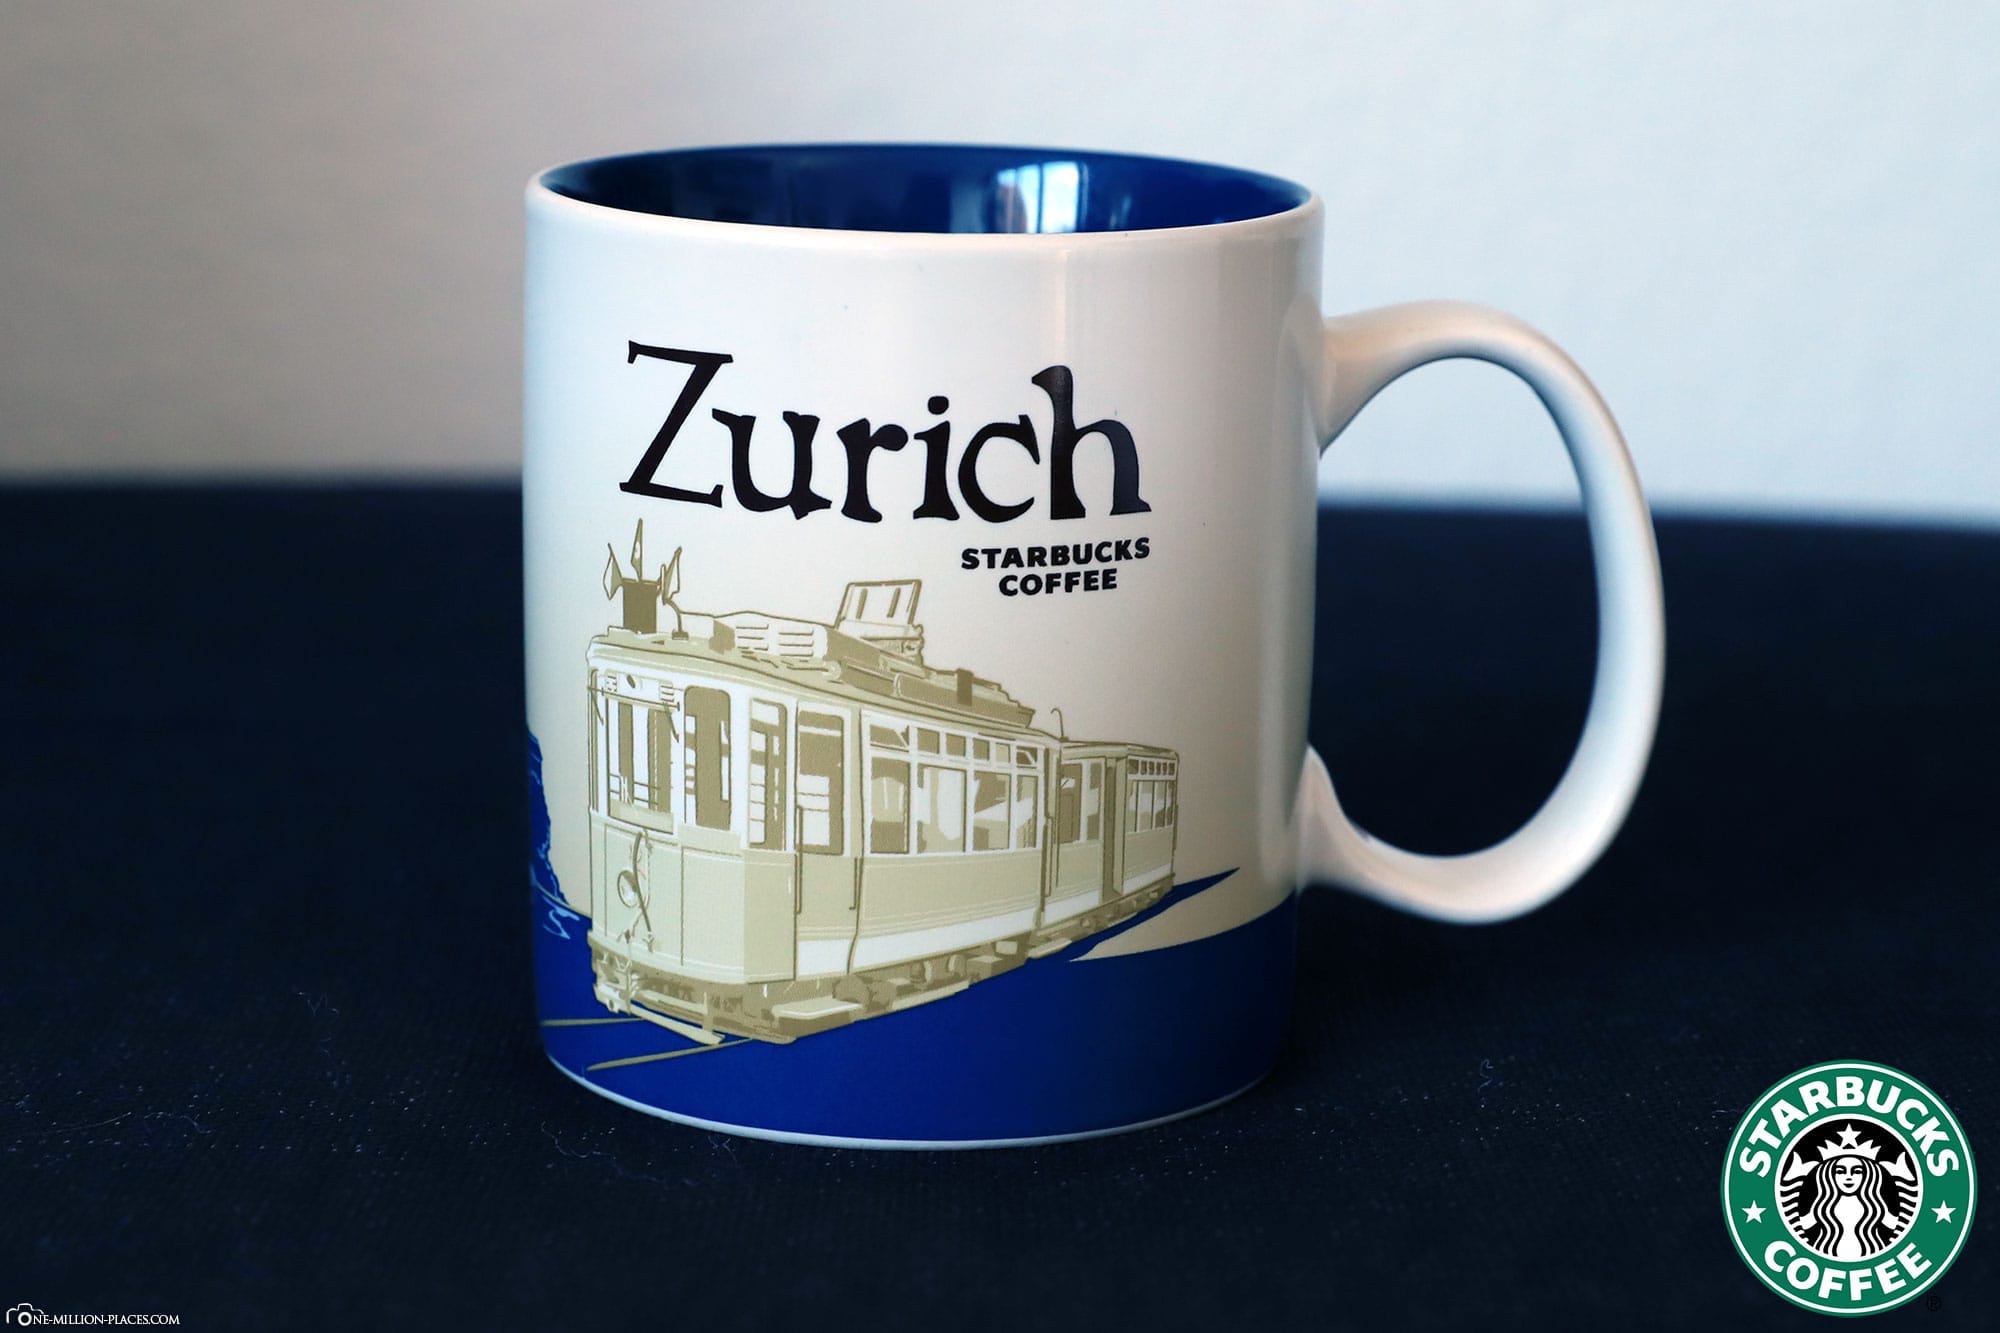 Zurich, Starbucks Cup, Global Icon Series, City Mugs, Collection, Switzerland, TravelReport